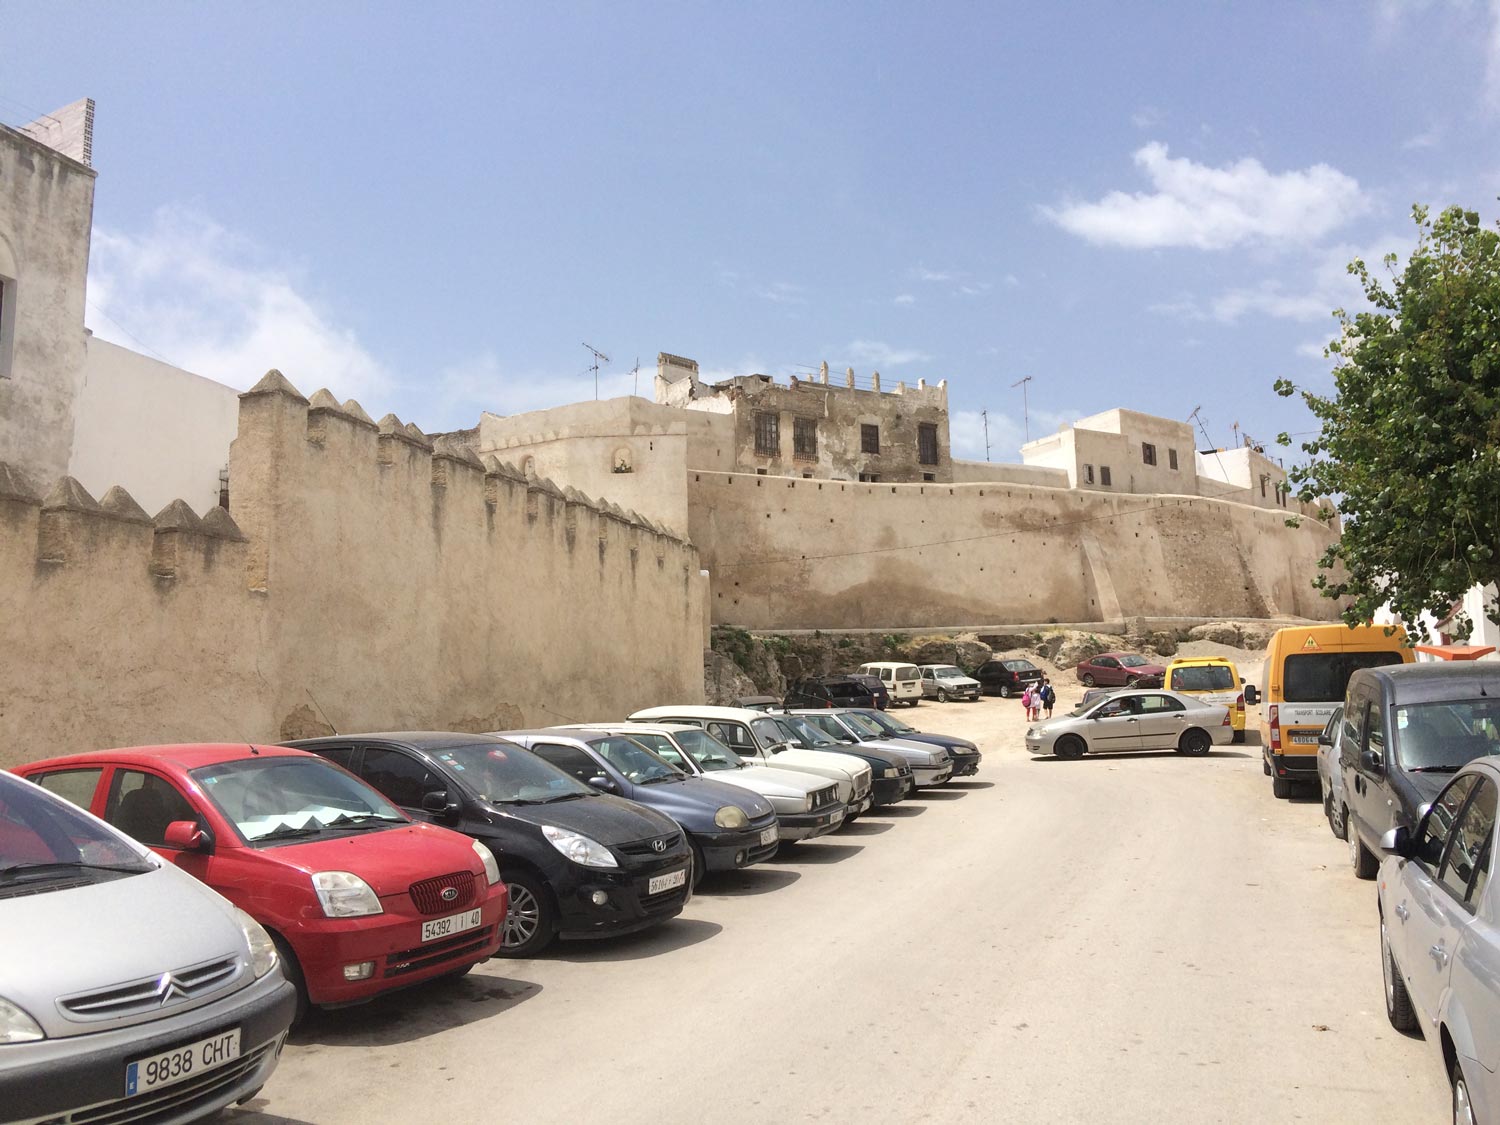  Tetouan - View of the medina walls near Bab Jiaf